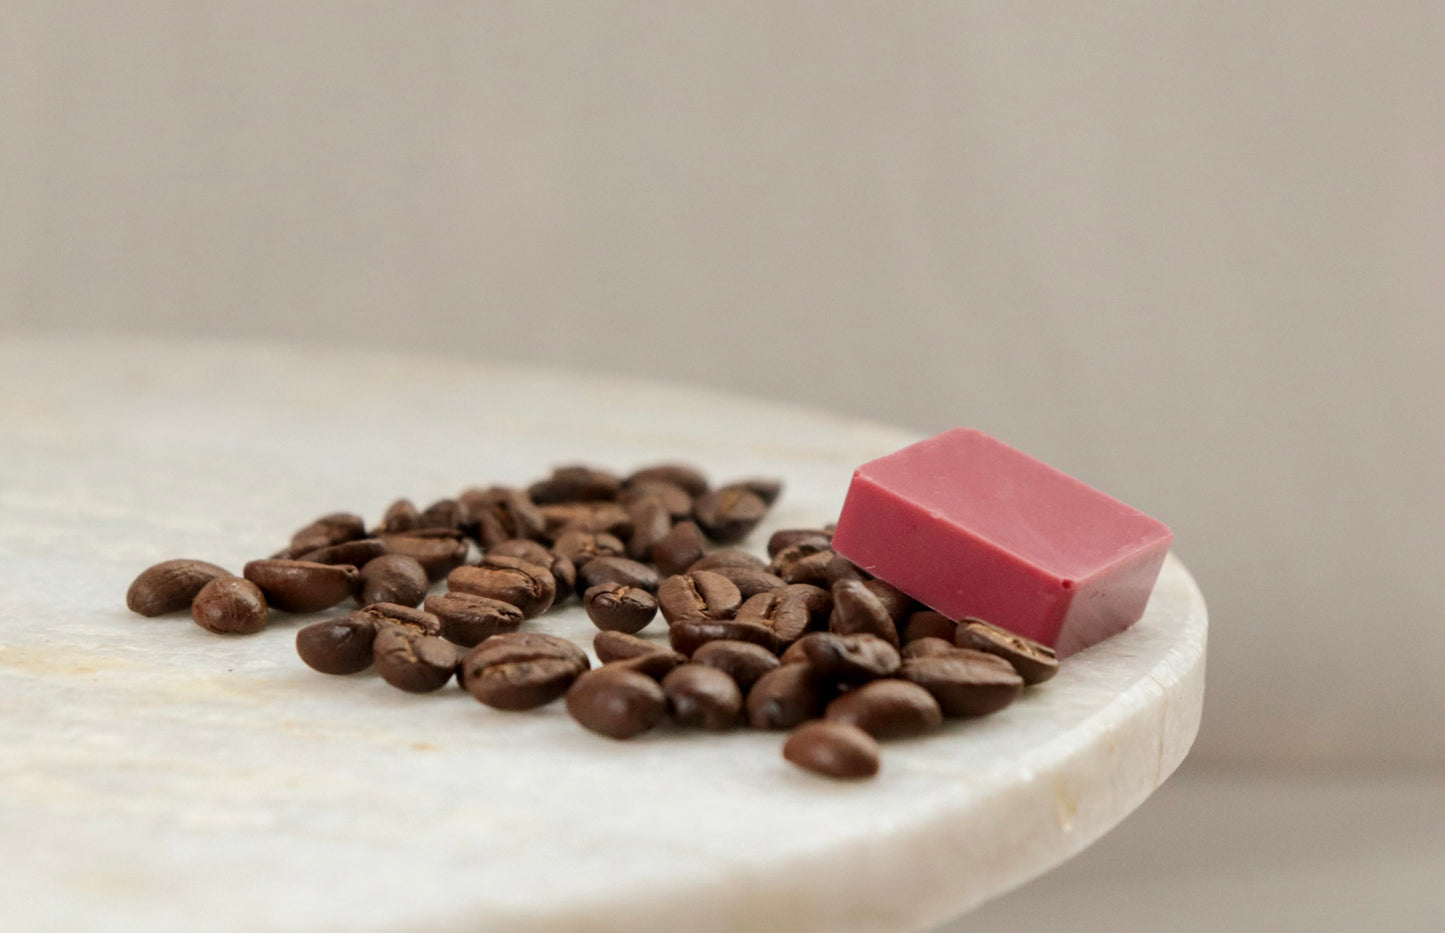 16-Pack Chocolate for Coffee Mocha